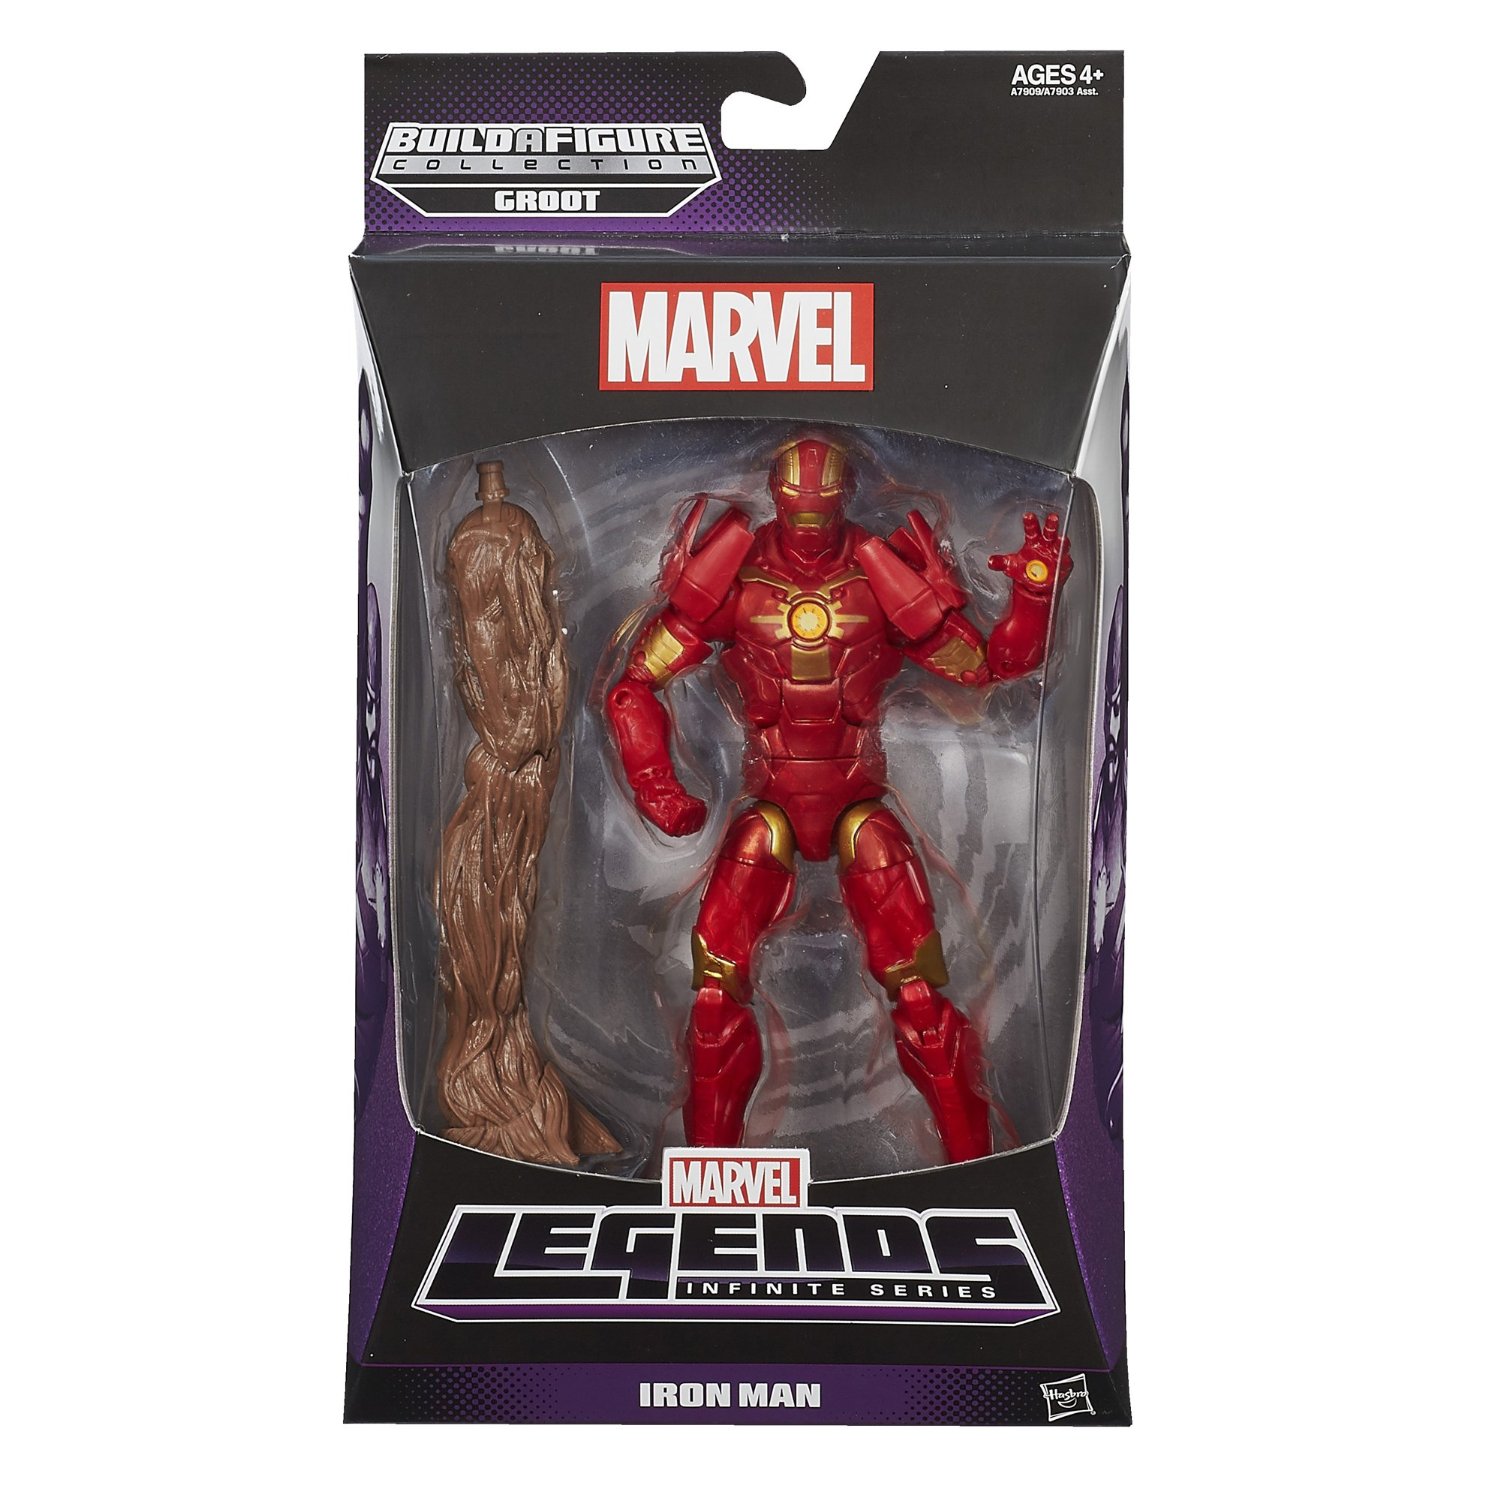 IRON MAN Guardians of the Galaxy Marvel Legends Infinite Series 6" Figure 2014 